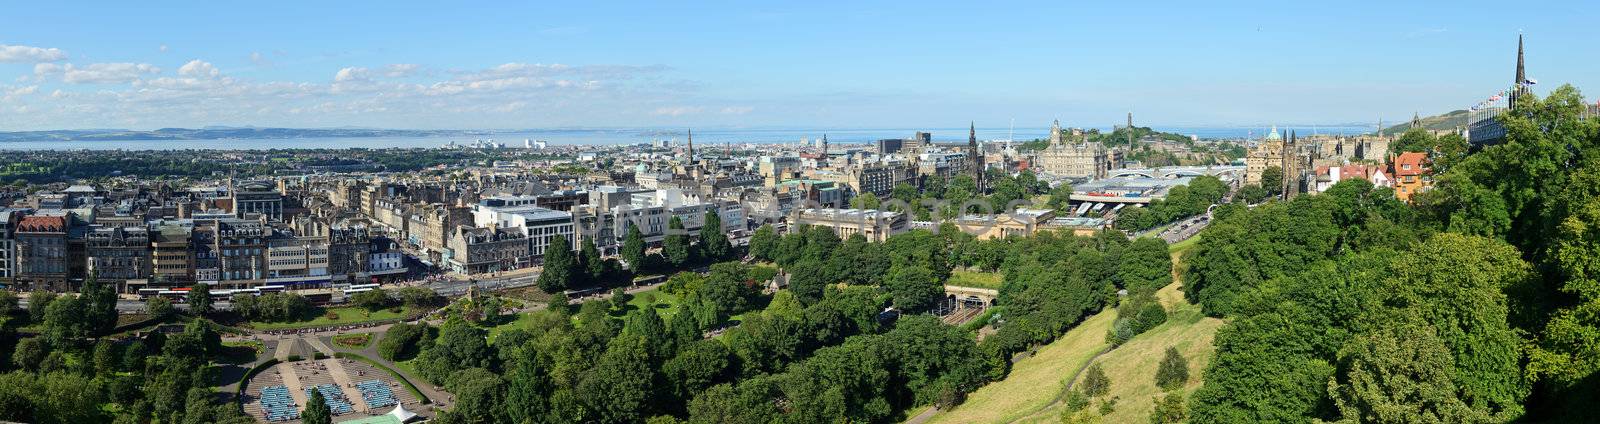 Edinburgh cityscape panorama by naumoid